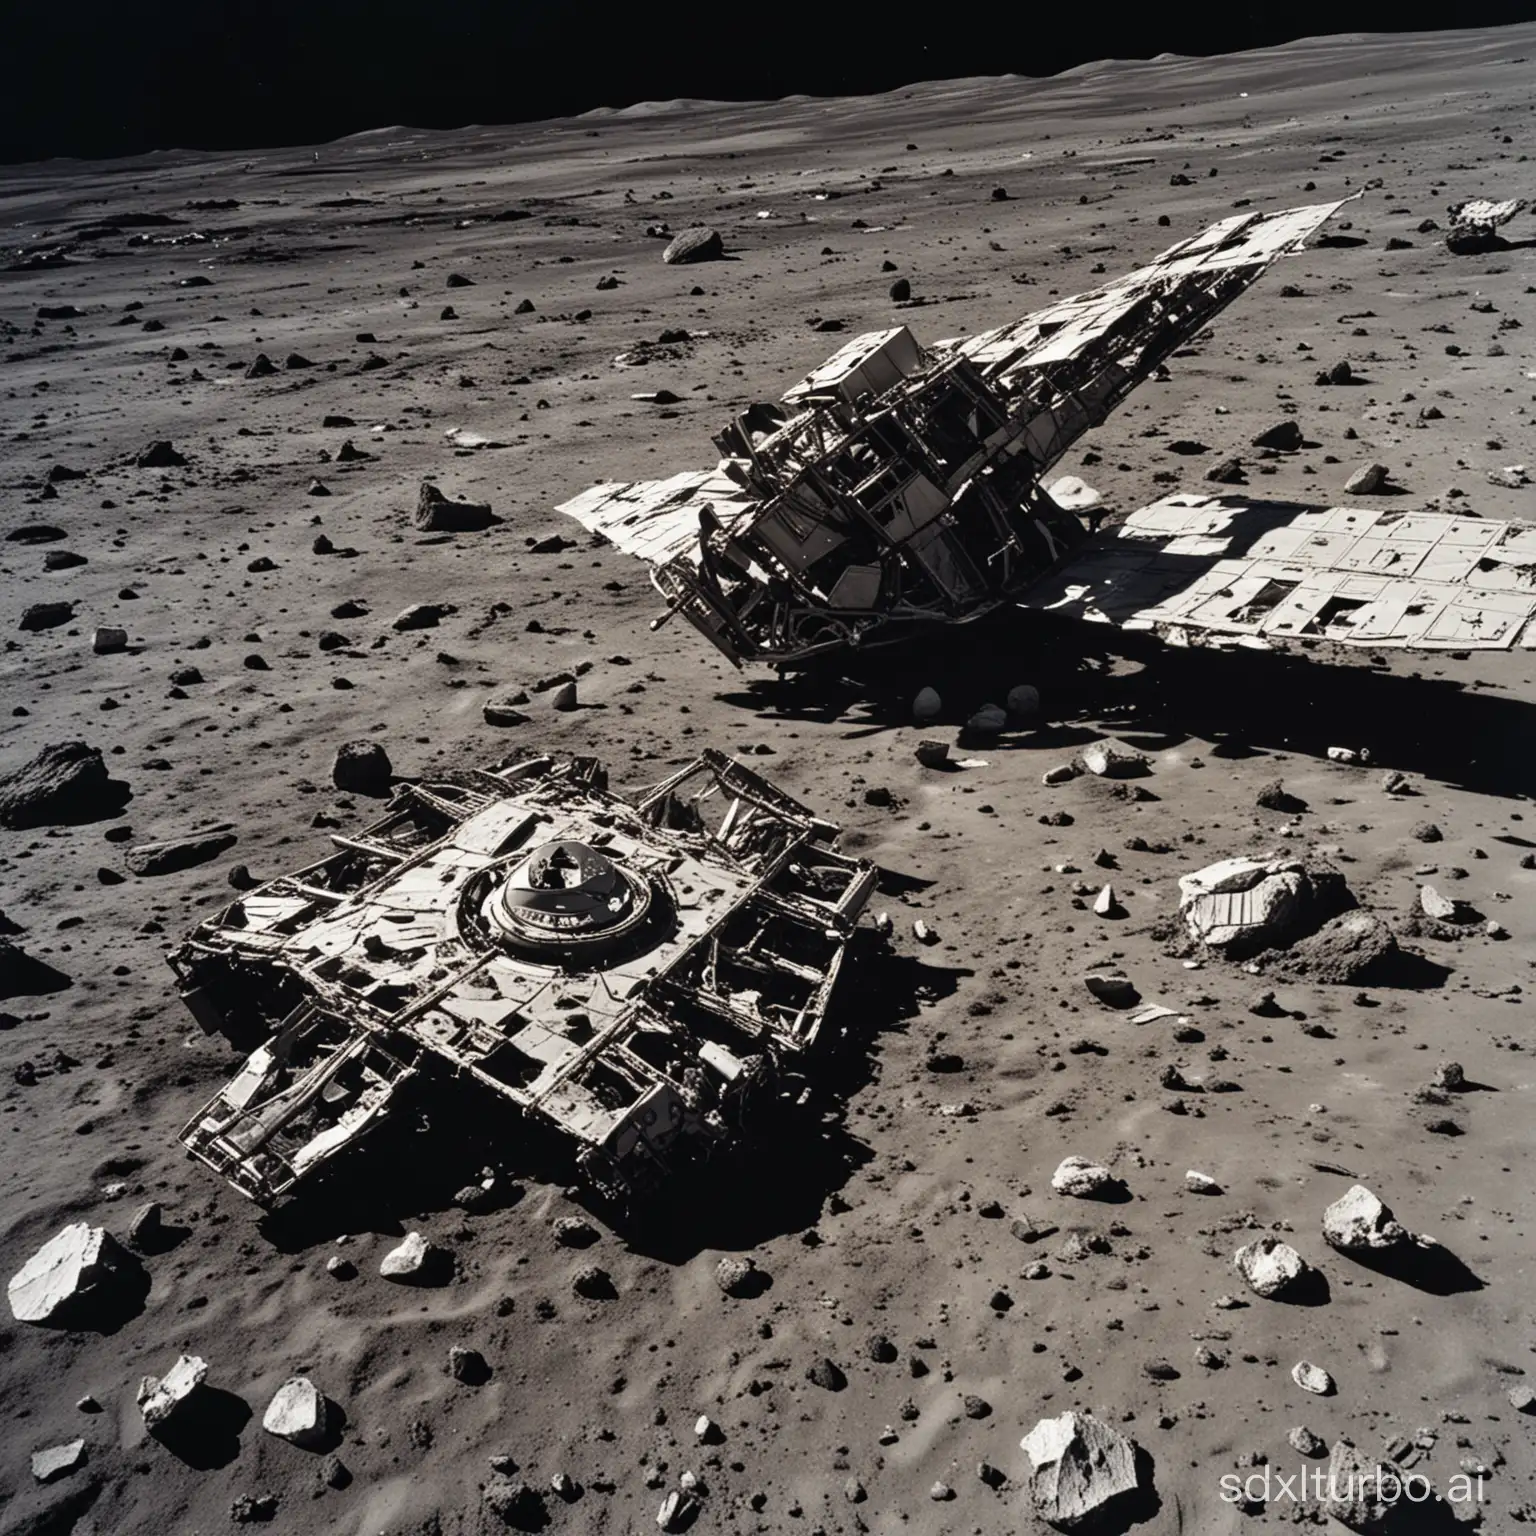 ancient alien starship debris multiple wreck parts broken up massive destruction accident impact in lunar orbit